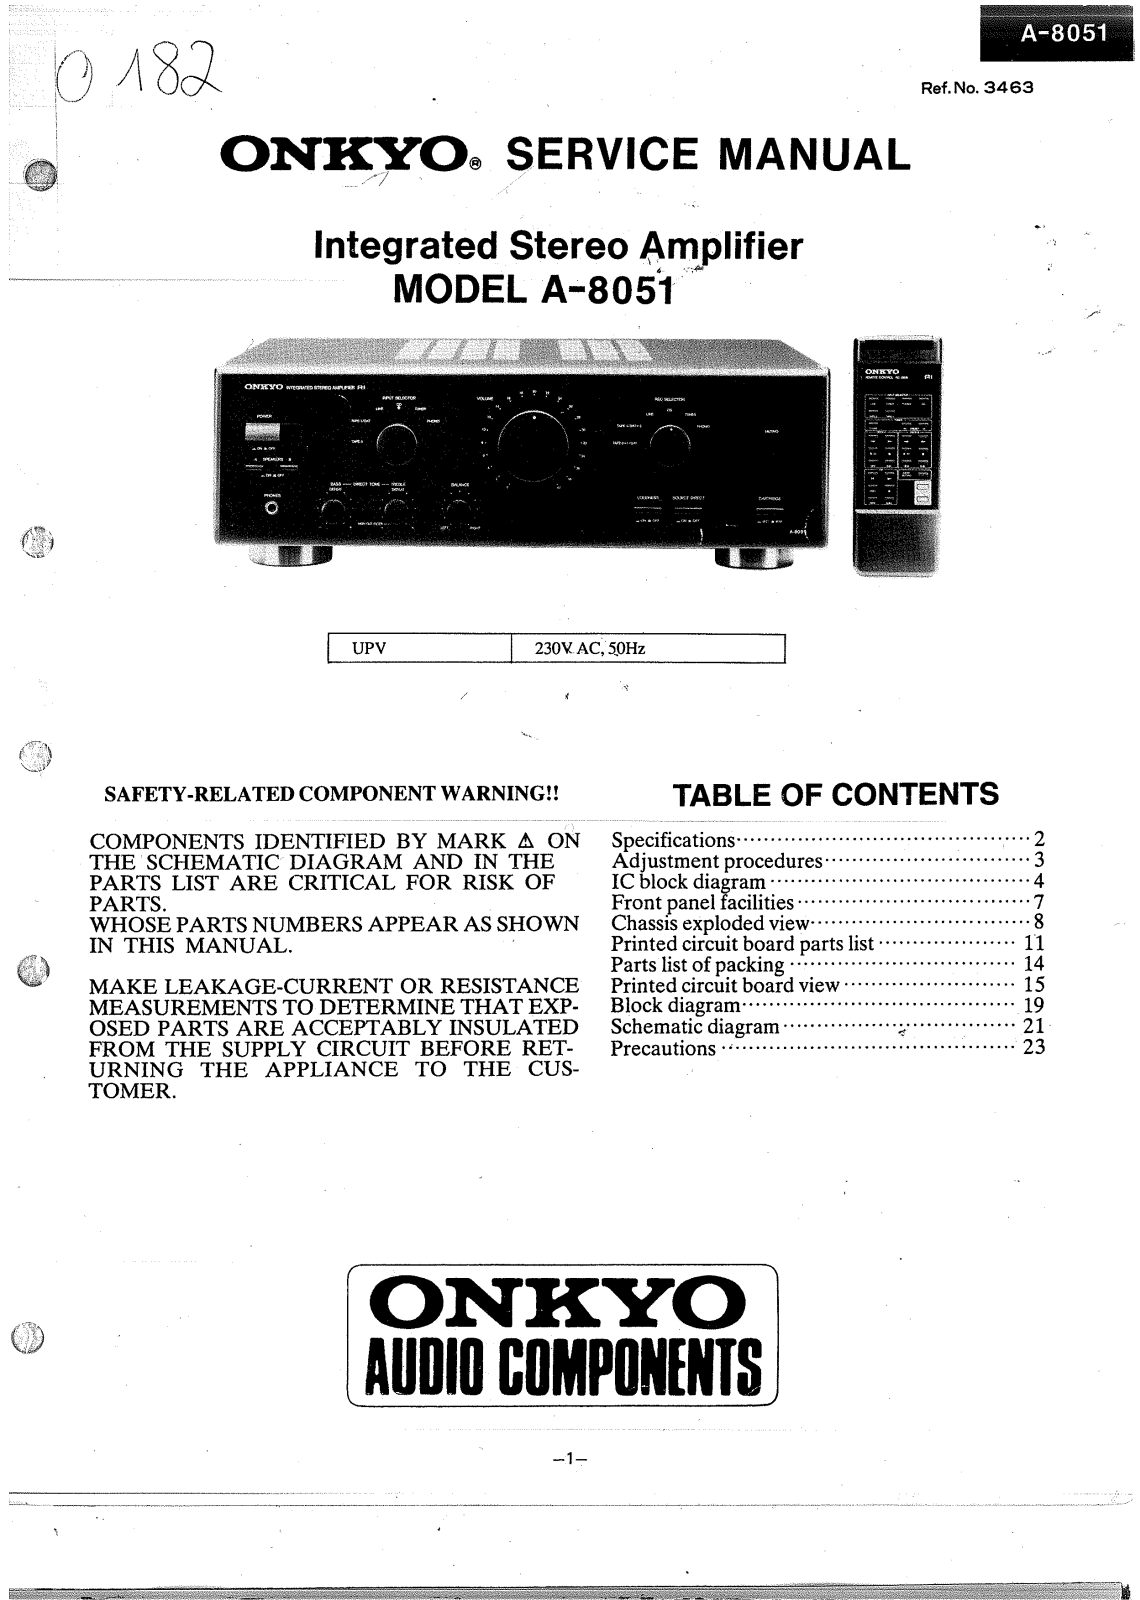 Onkyo A-8051 Service Manual